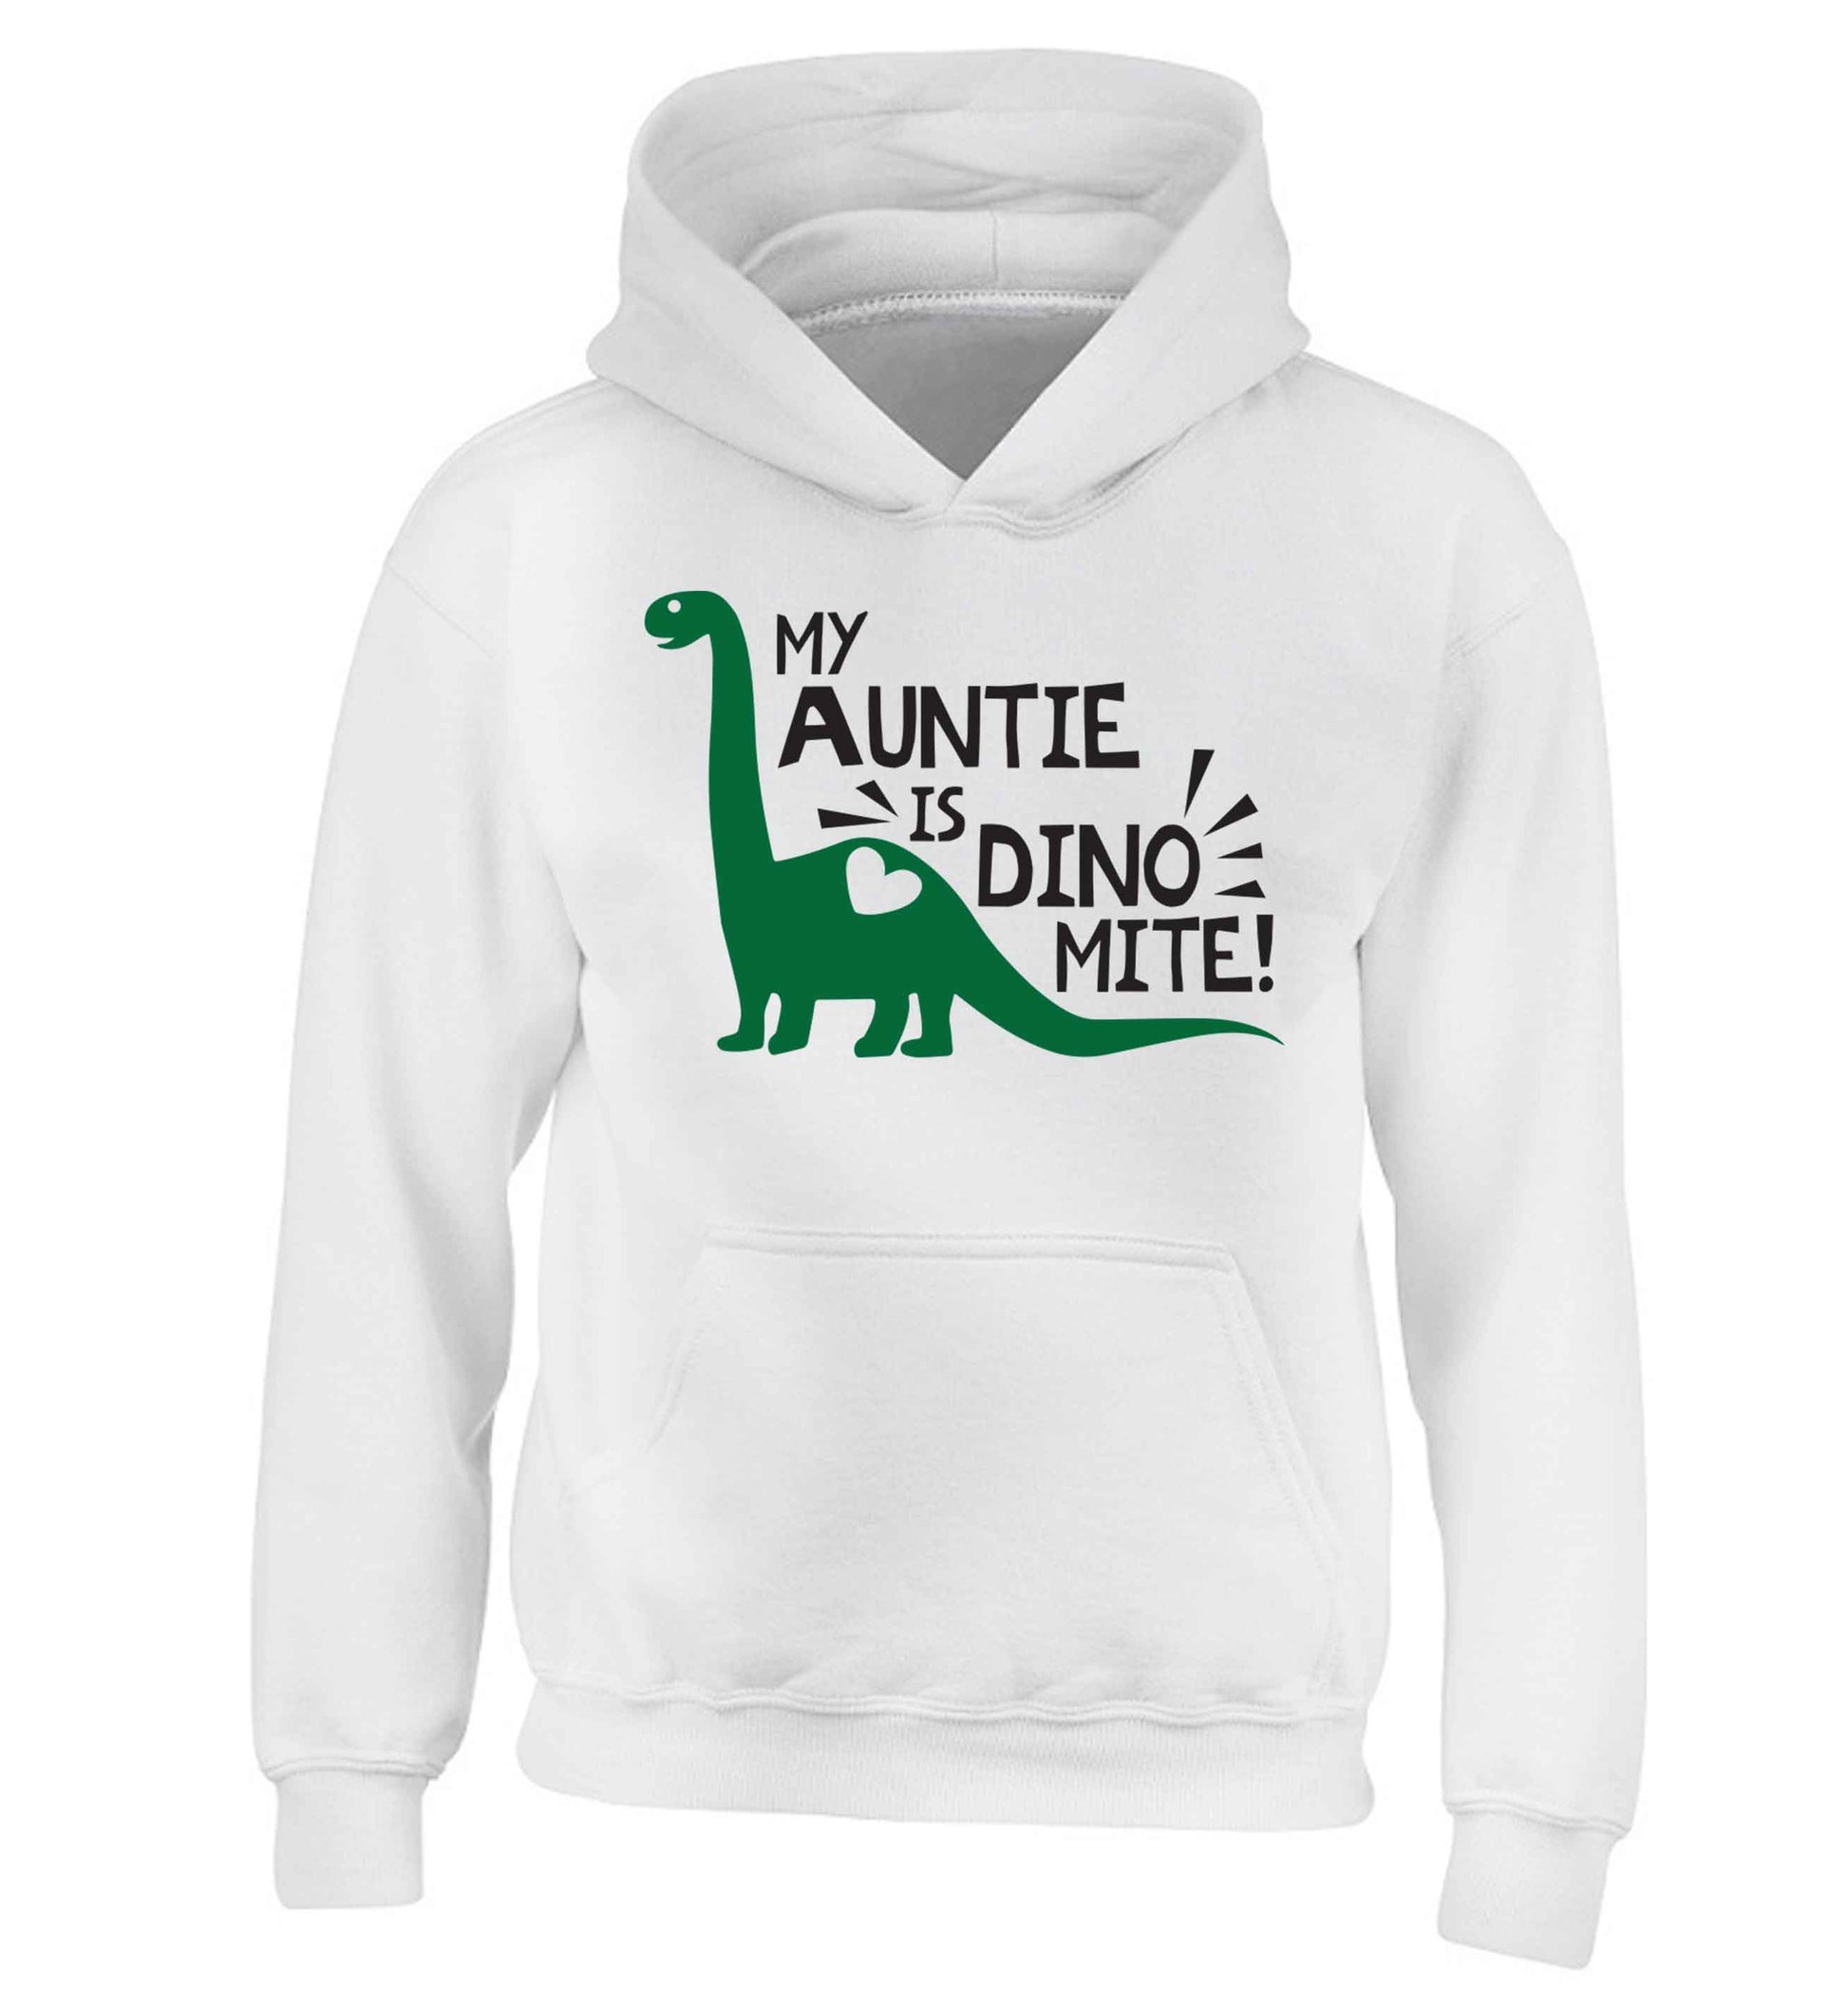 My auntie is dinomite! children's white hoodie 12-13 Years